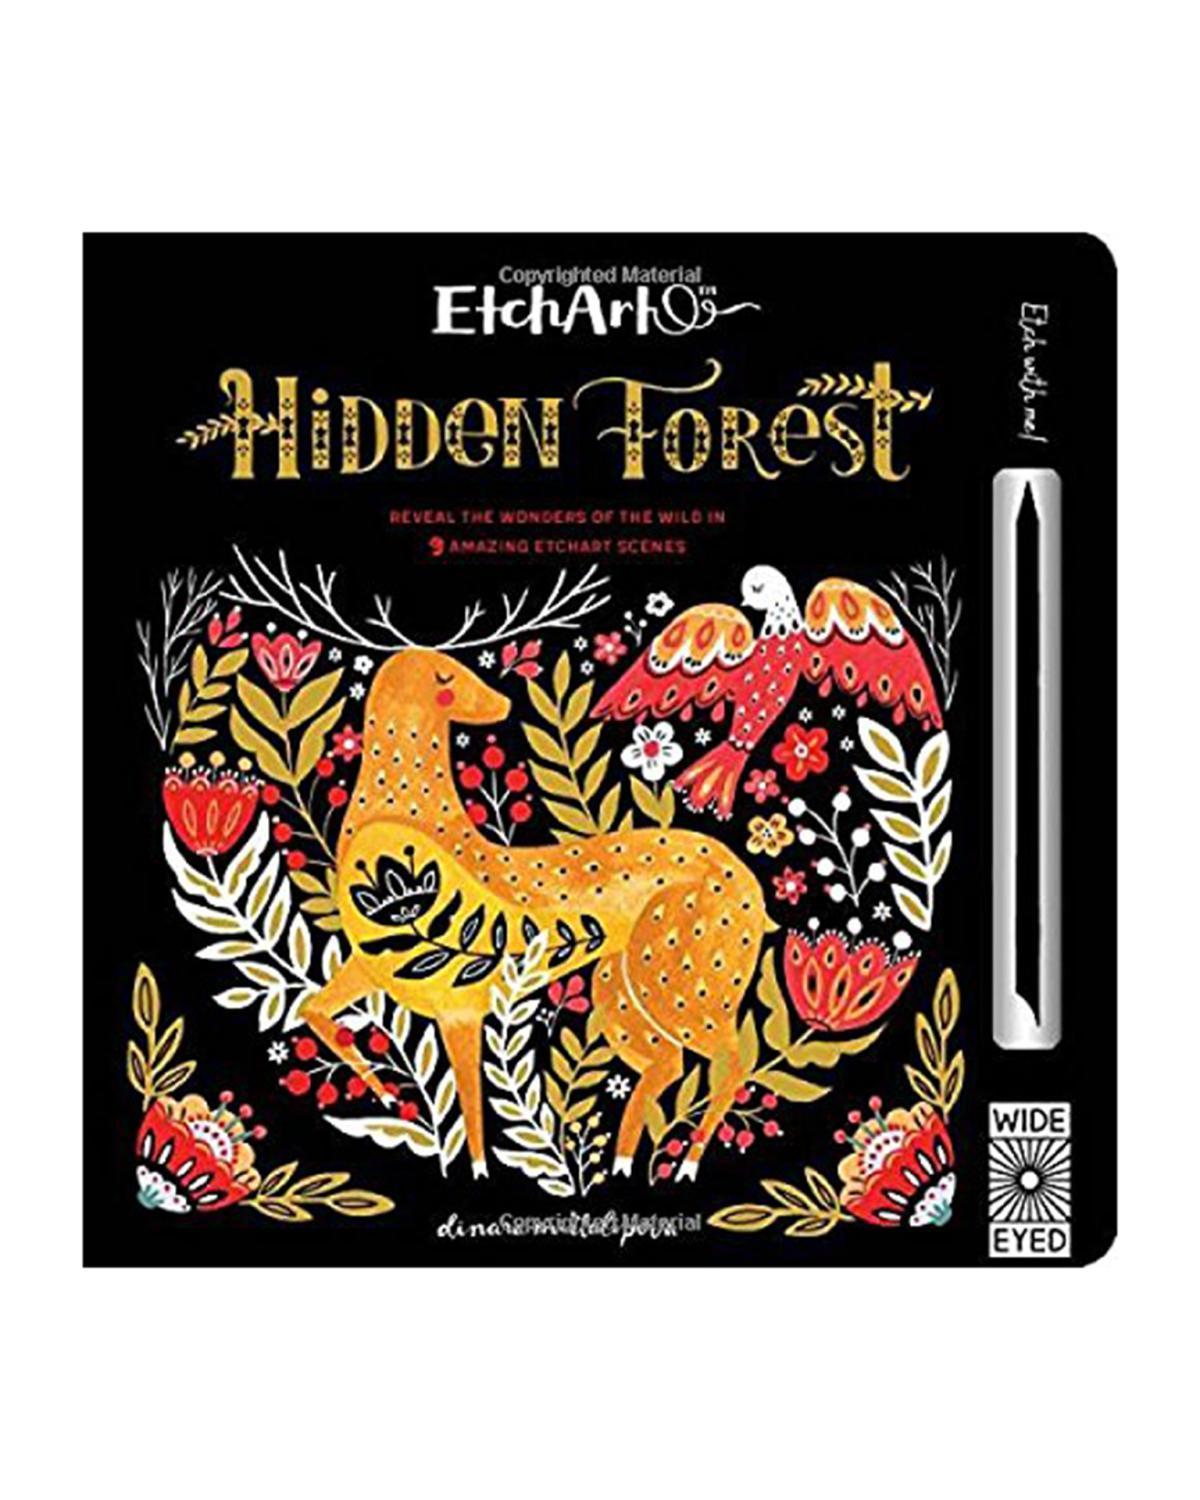 Little quarto publishing group play Etchart: Hidden Forest